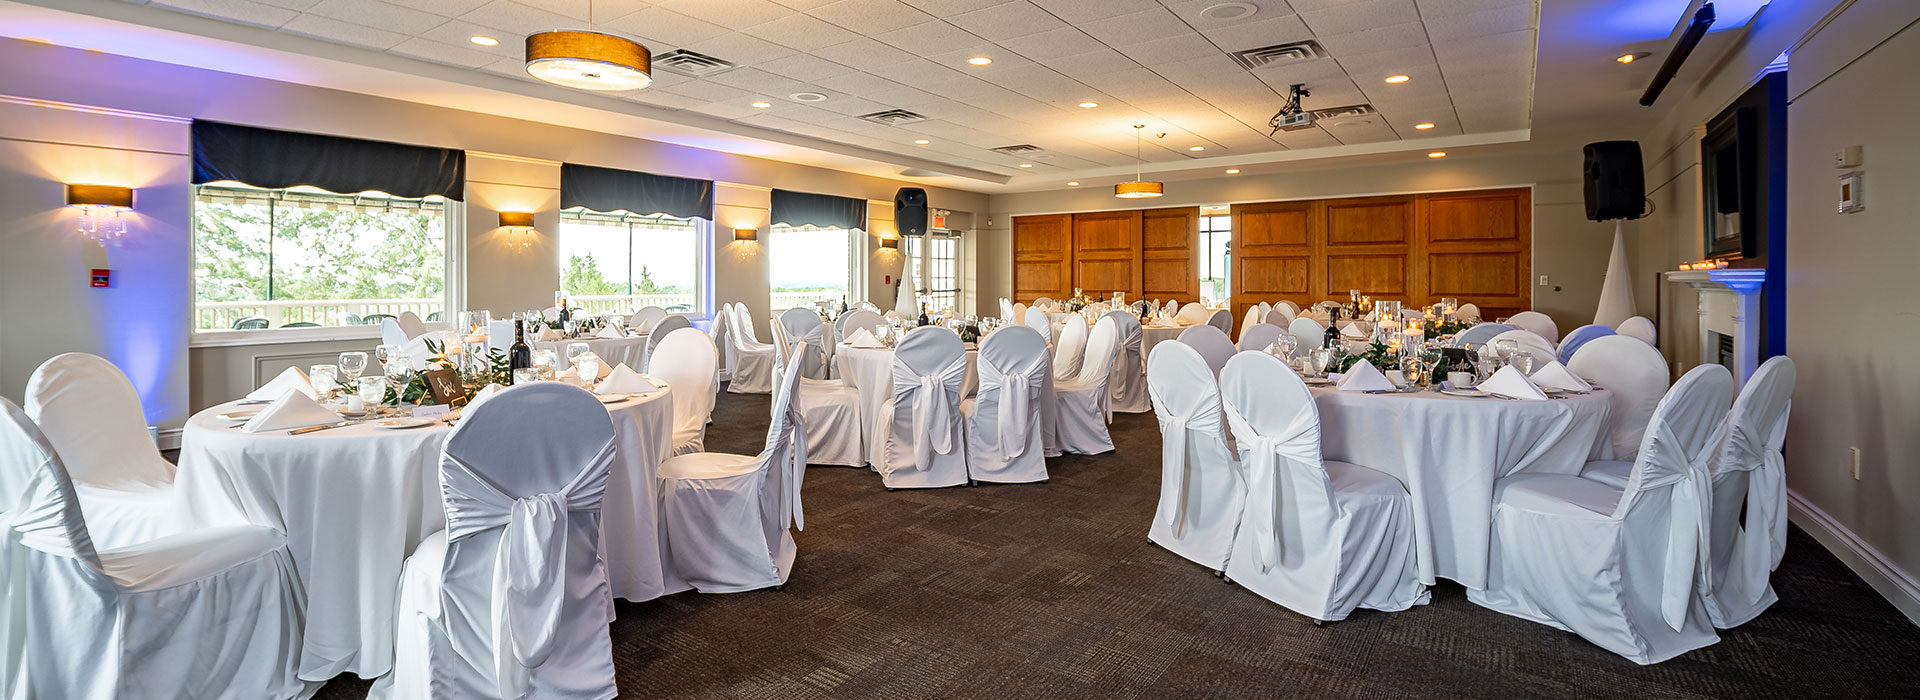 Host Weddings and Celebrations at Peninsula Lakes Golf Club